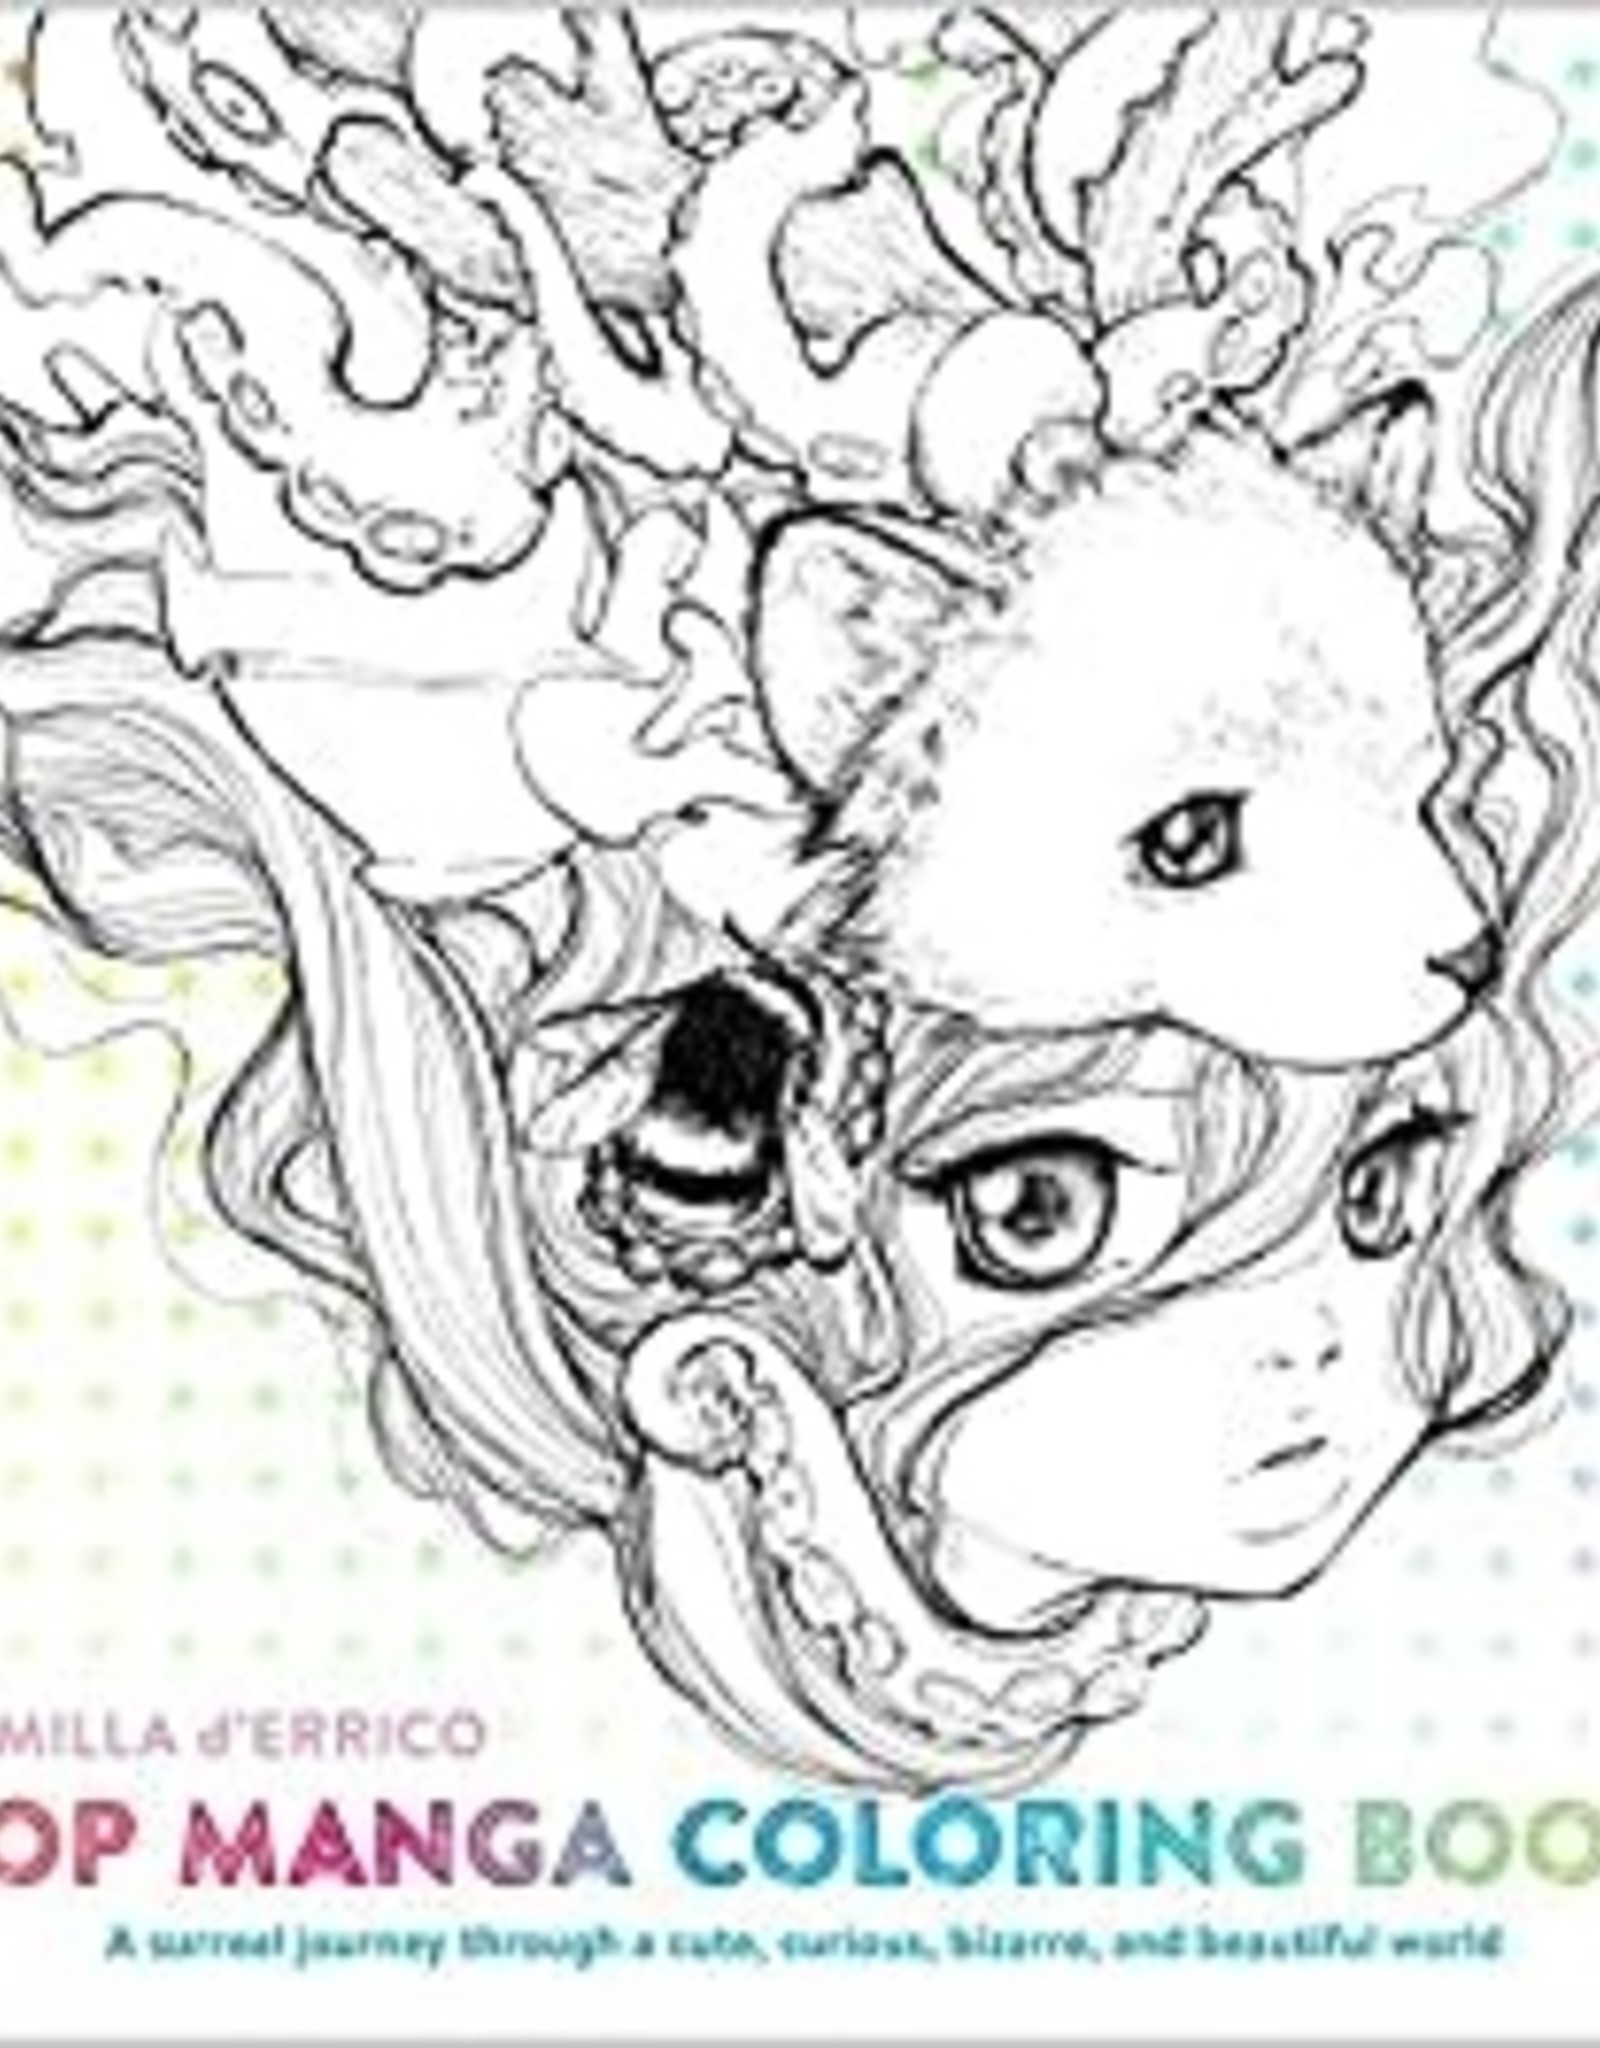 Watson Guptill Pop Manga Coloring Book